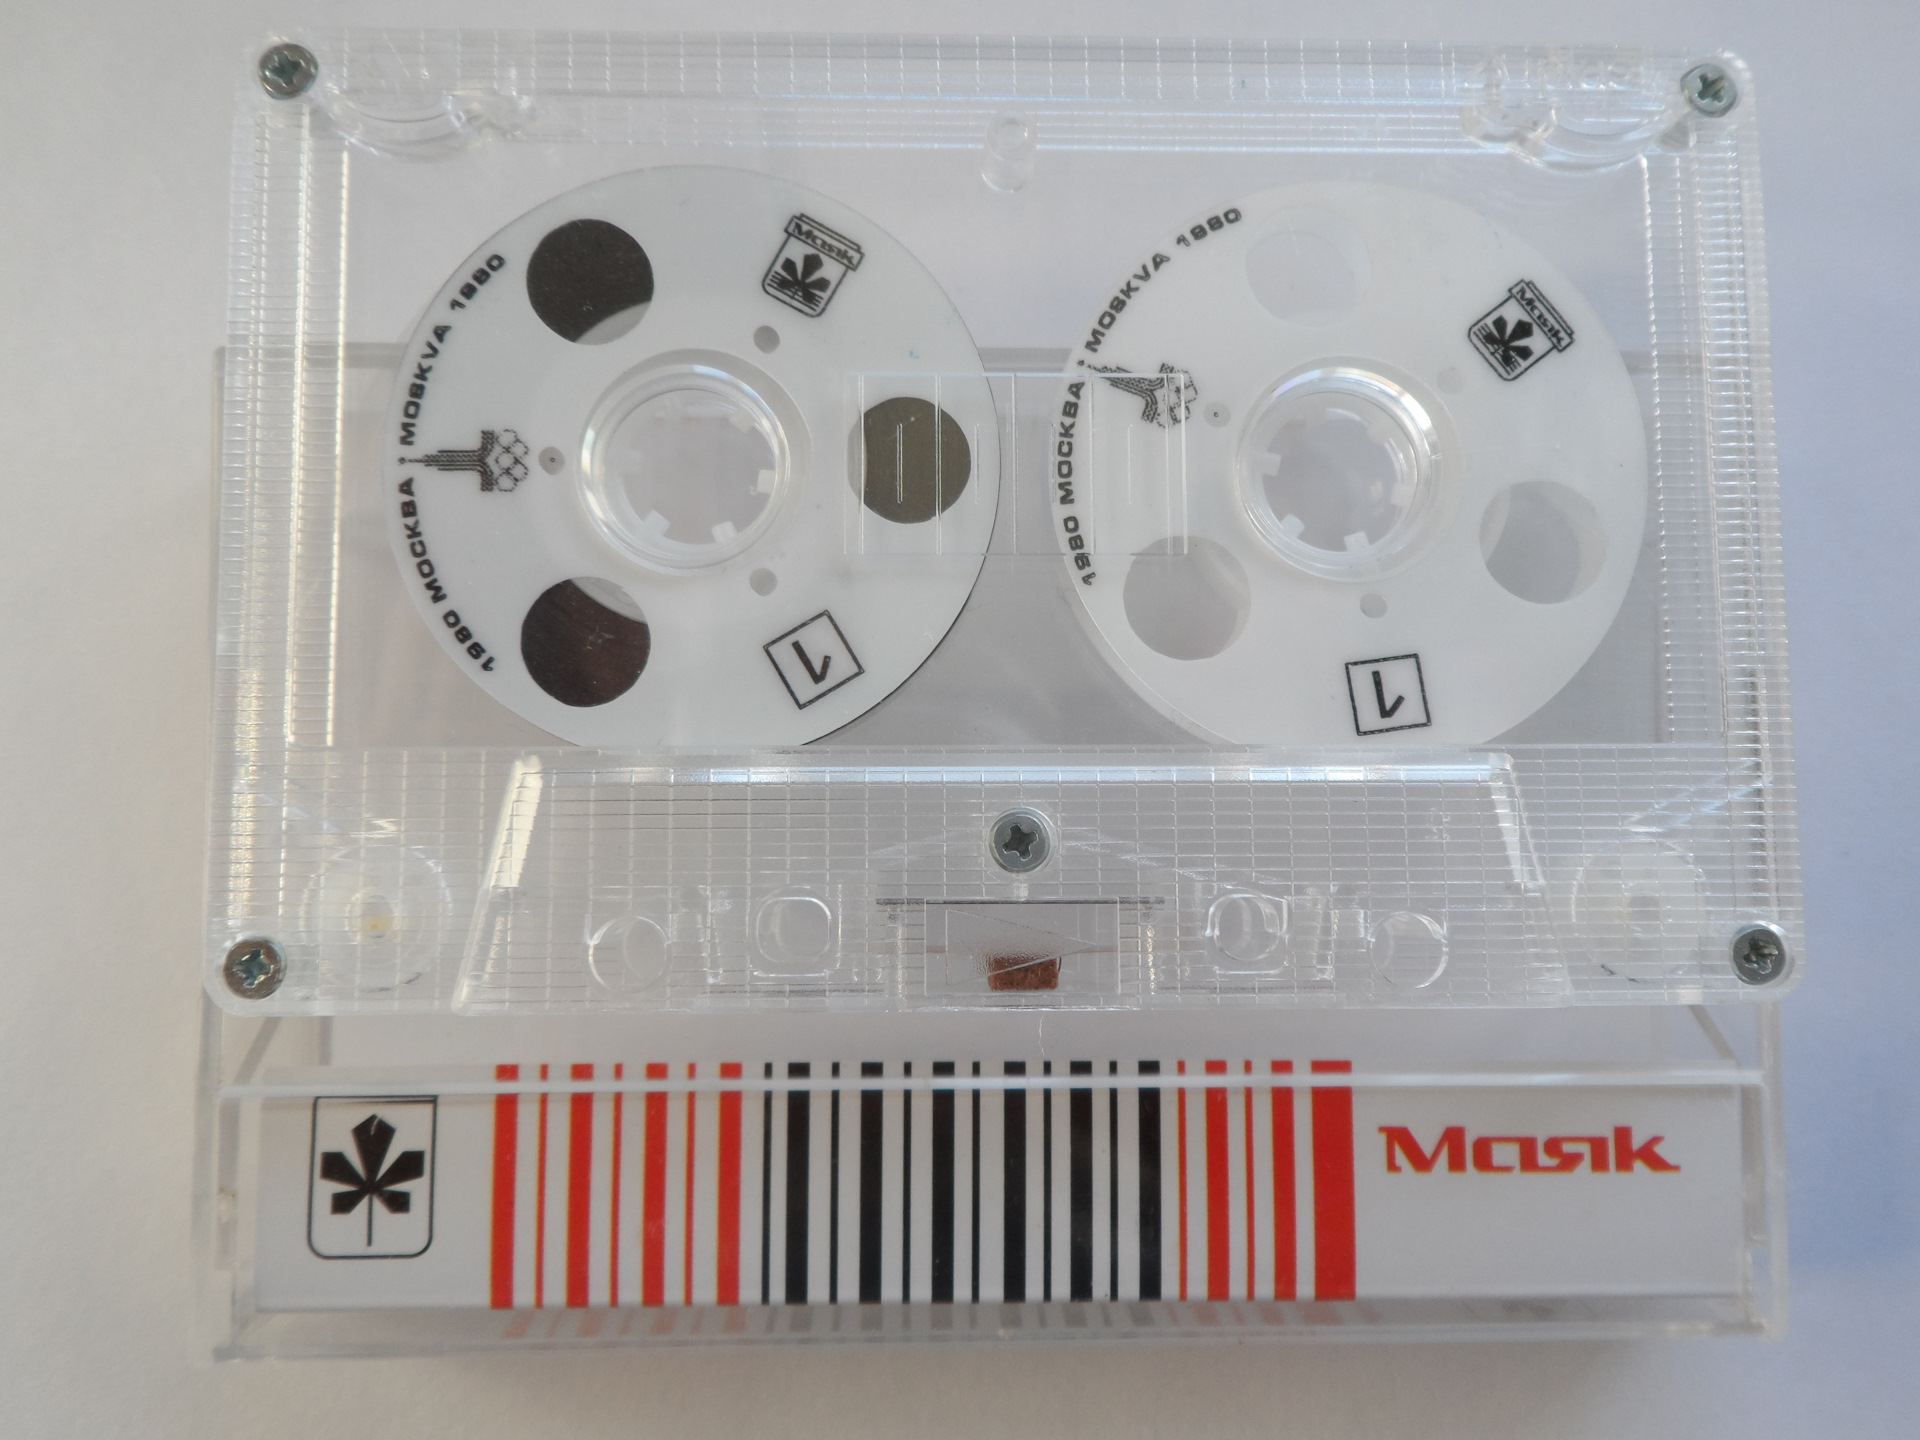 Батина кассета. Аудиокассета BASF Master Chrome super II 60 (Reel-to-Reel). Кассета для магнитофона Nirvana Gold 2. Audio Max 107 кассеты. Аудиокассета Sony super Metal Master 90.